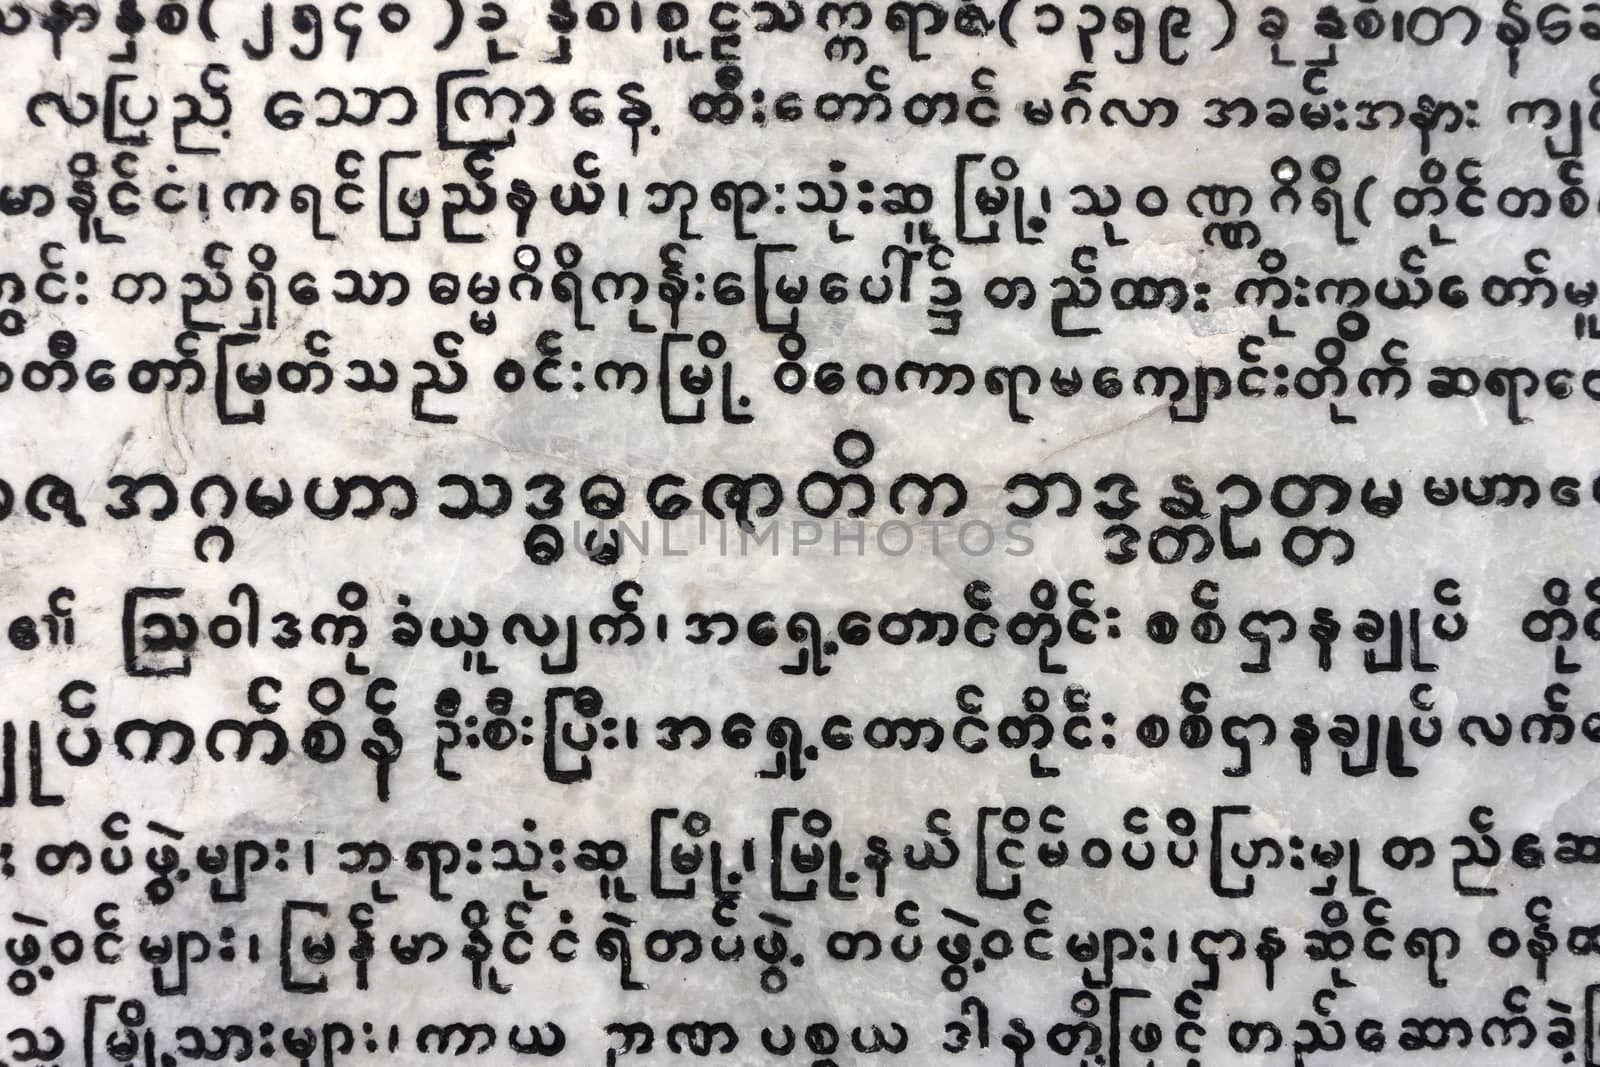 Payathonzu, Myanmar - May, 2019: Burmese script on stone tablet in a Buddhist temple.